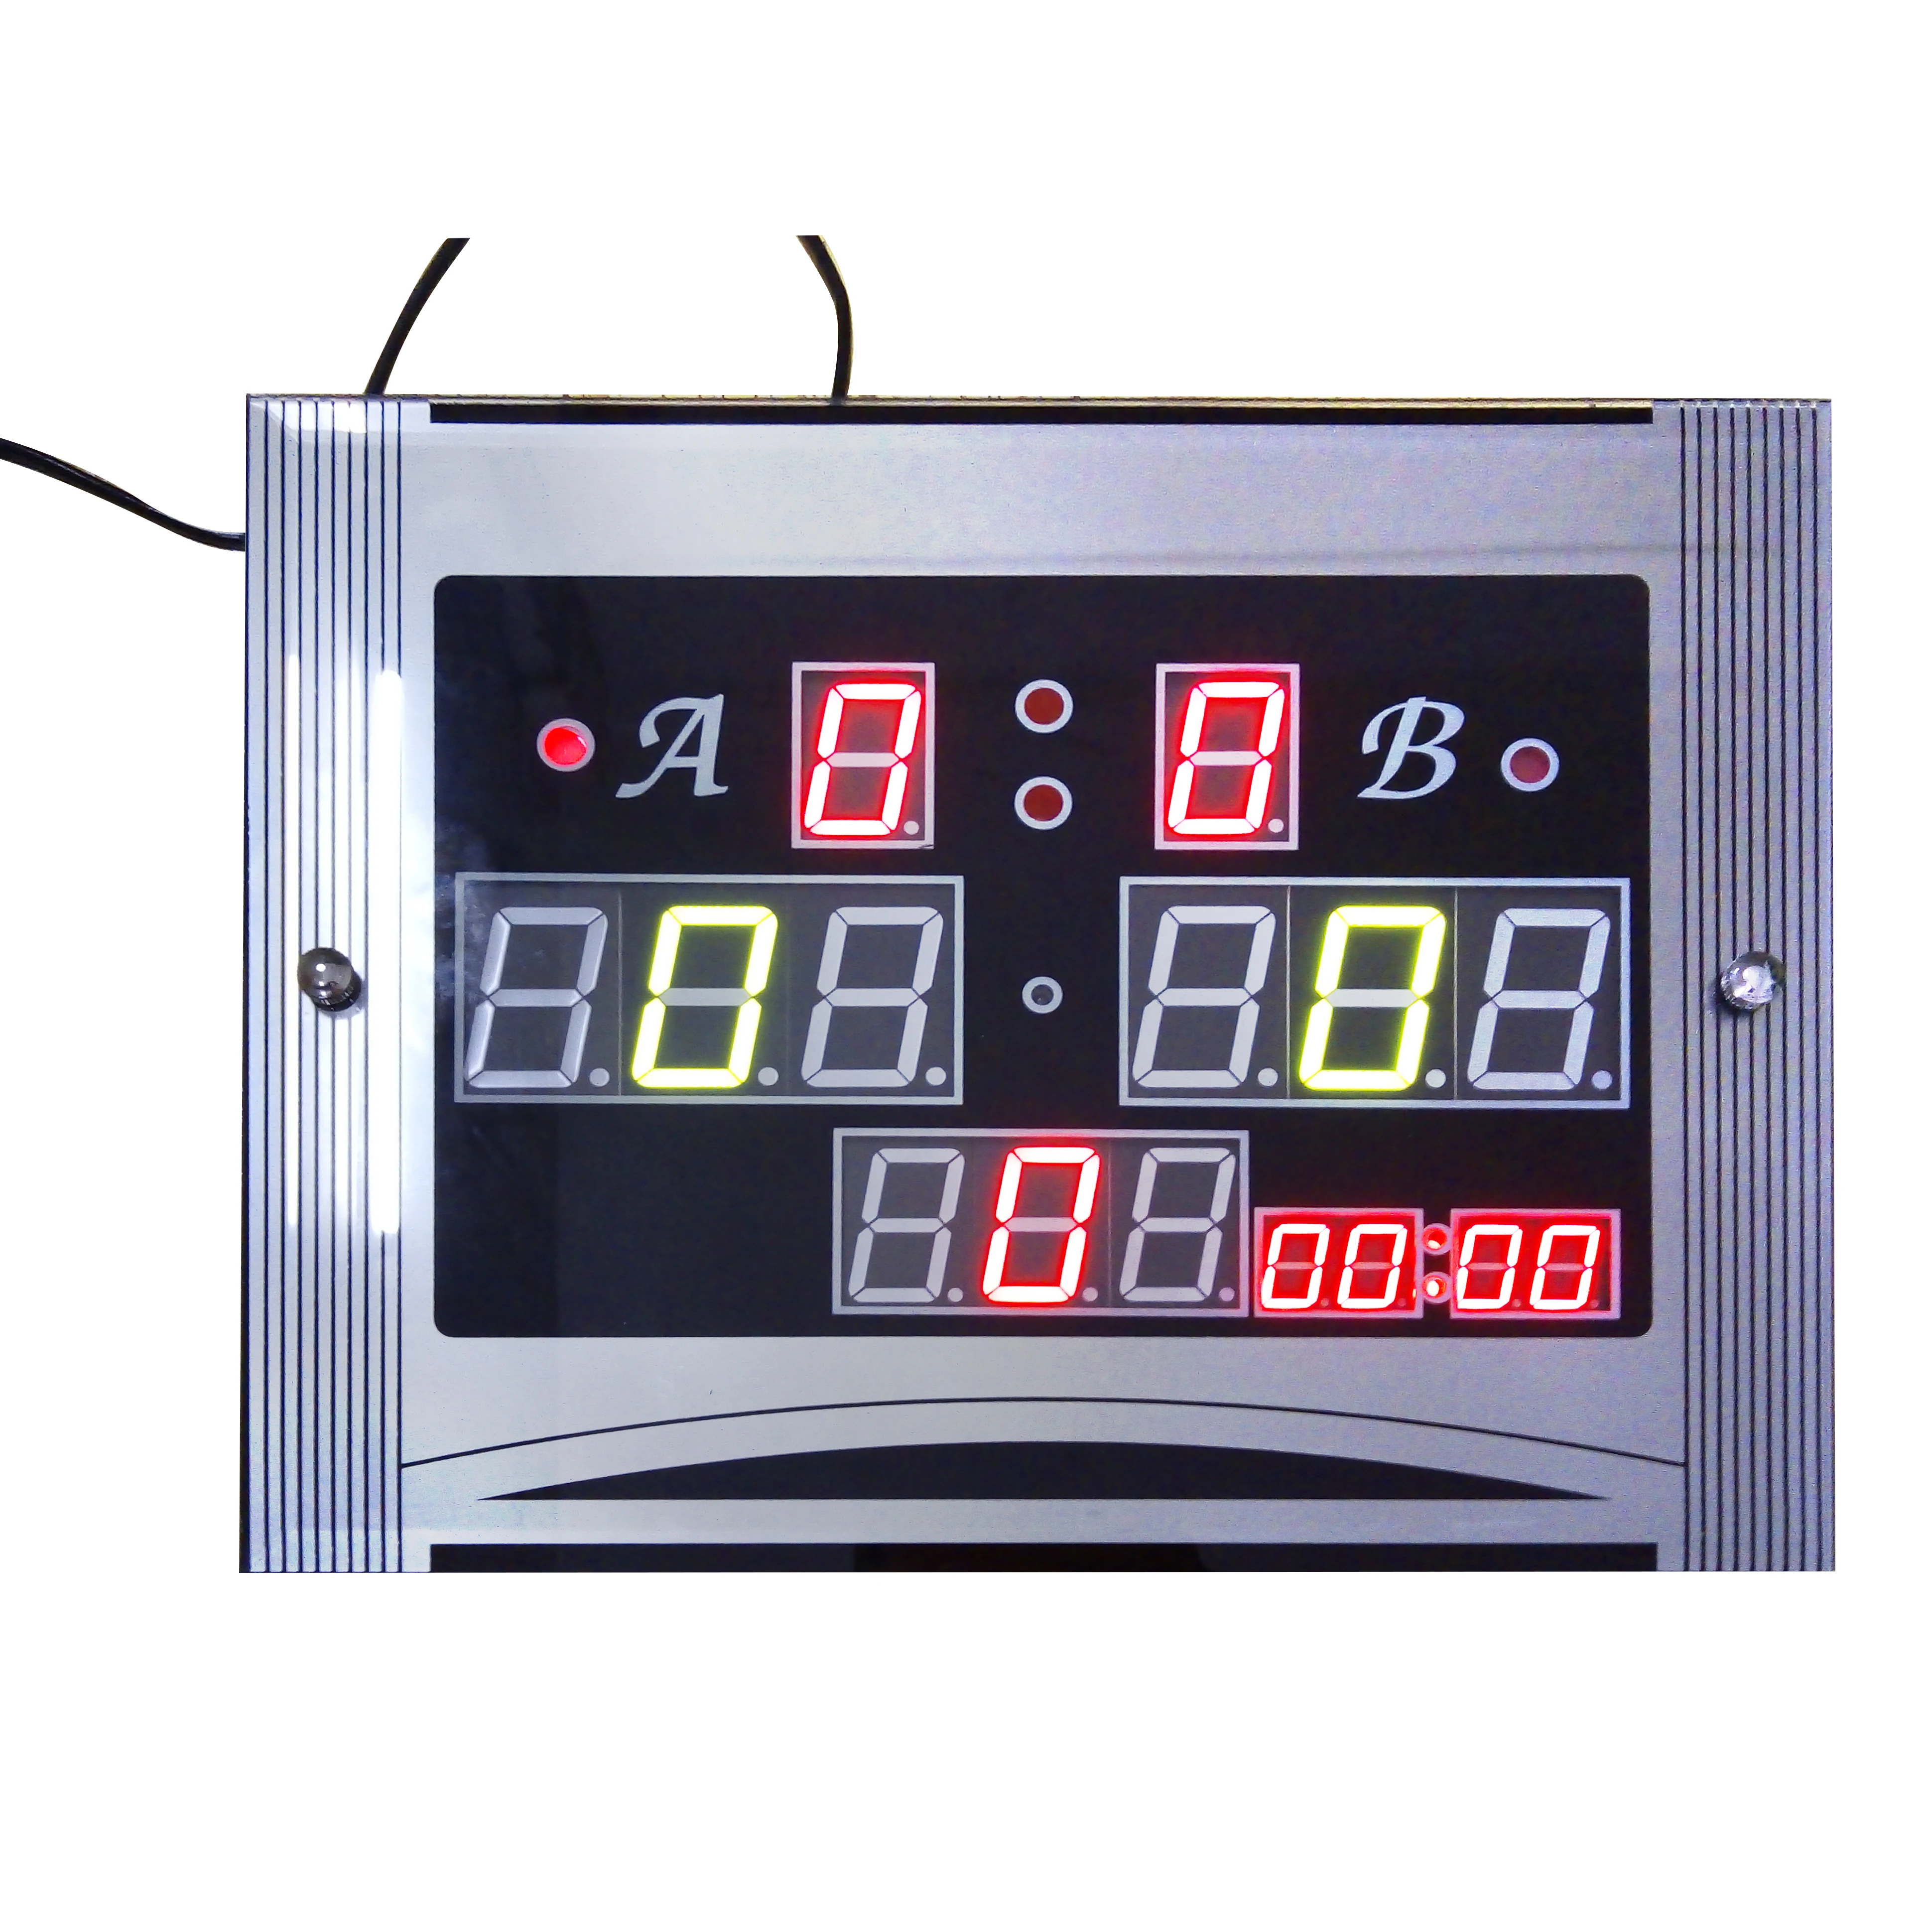 Source Electronic scoreboard for snooker table, pool table scoreboard, Billiard accessories on m.alibaba